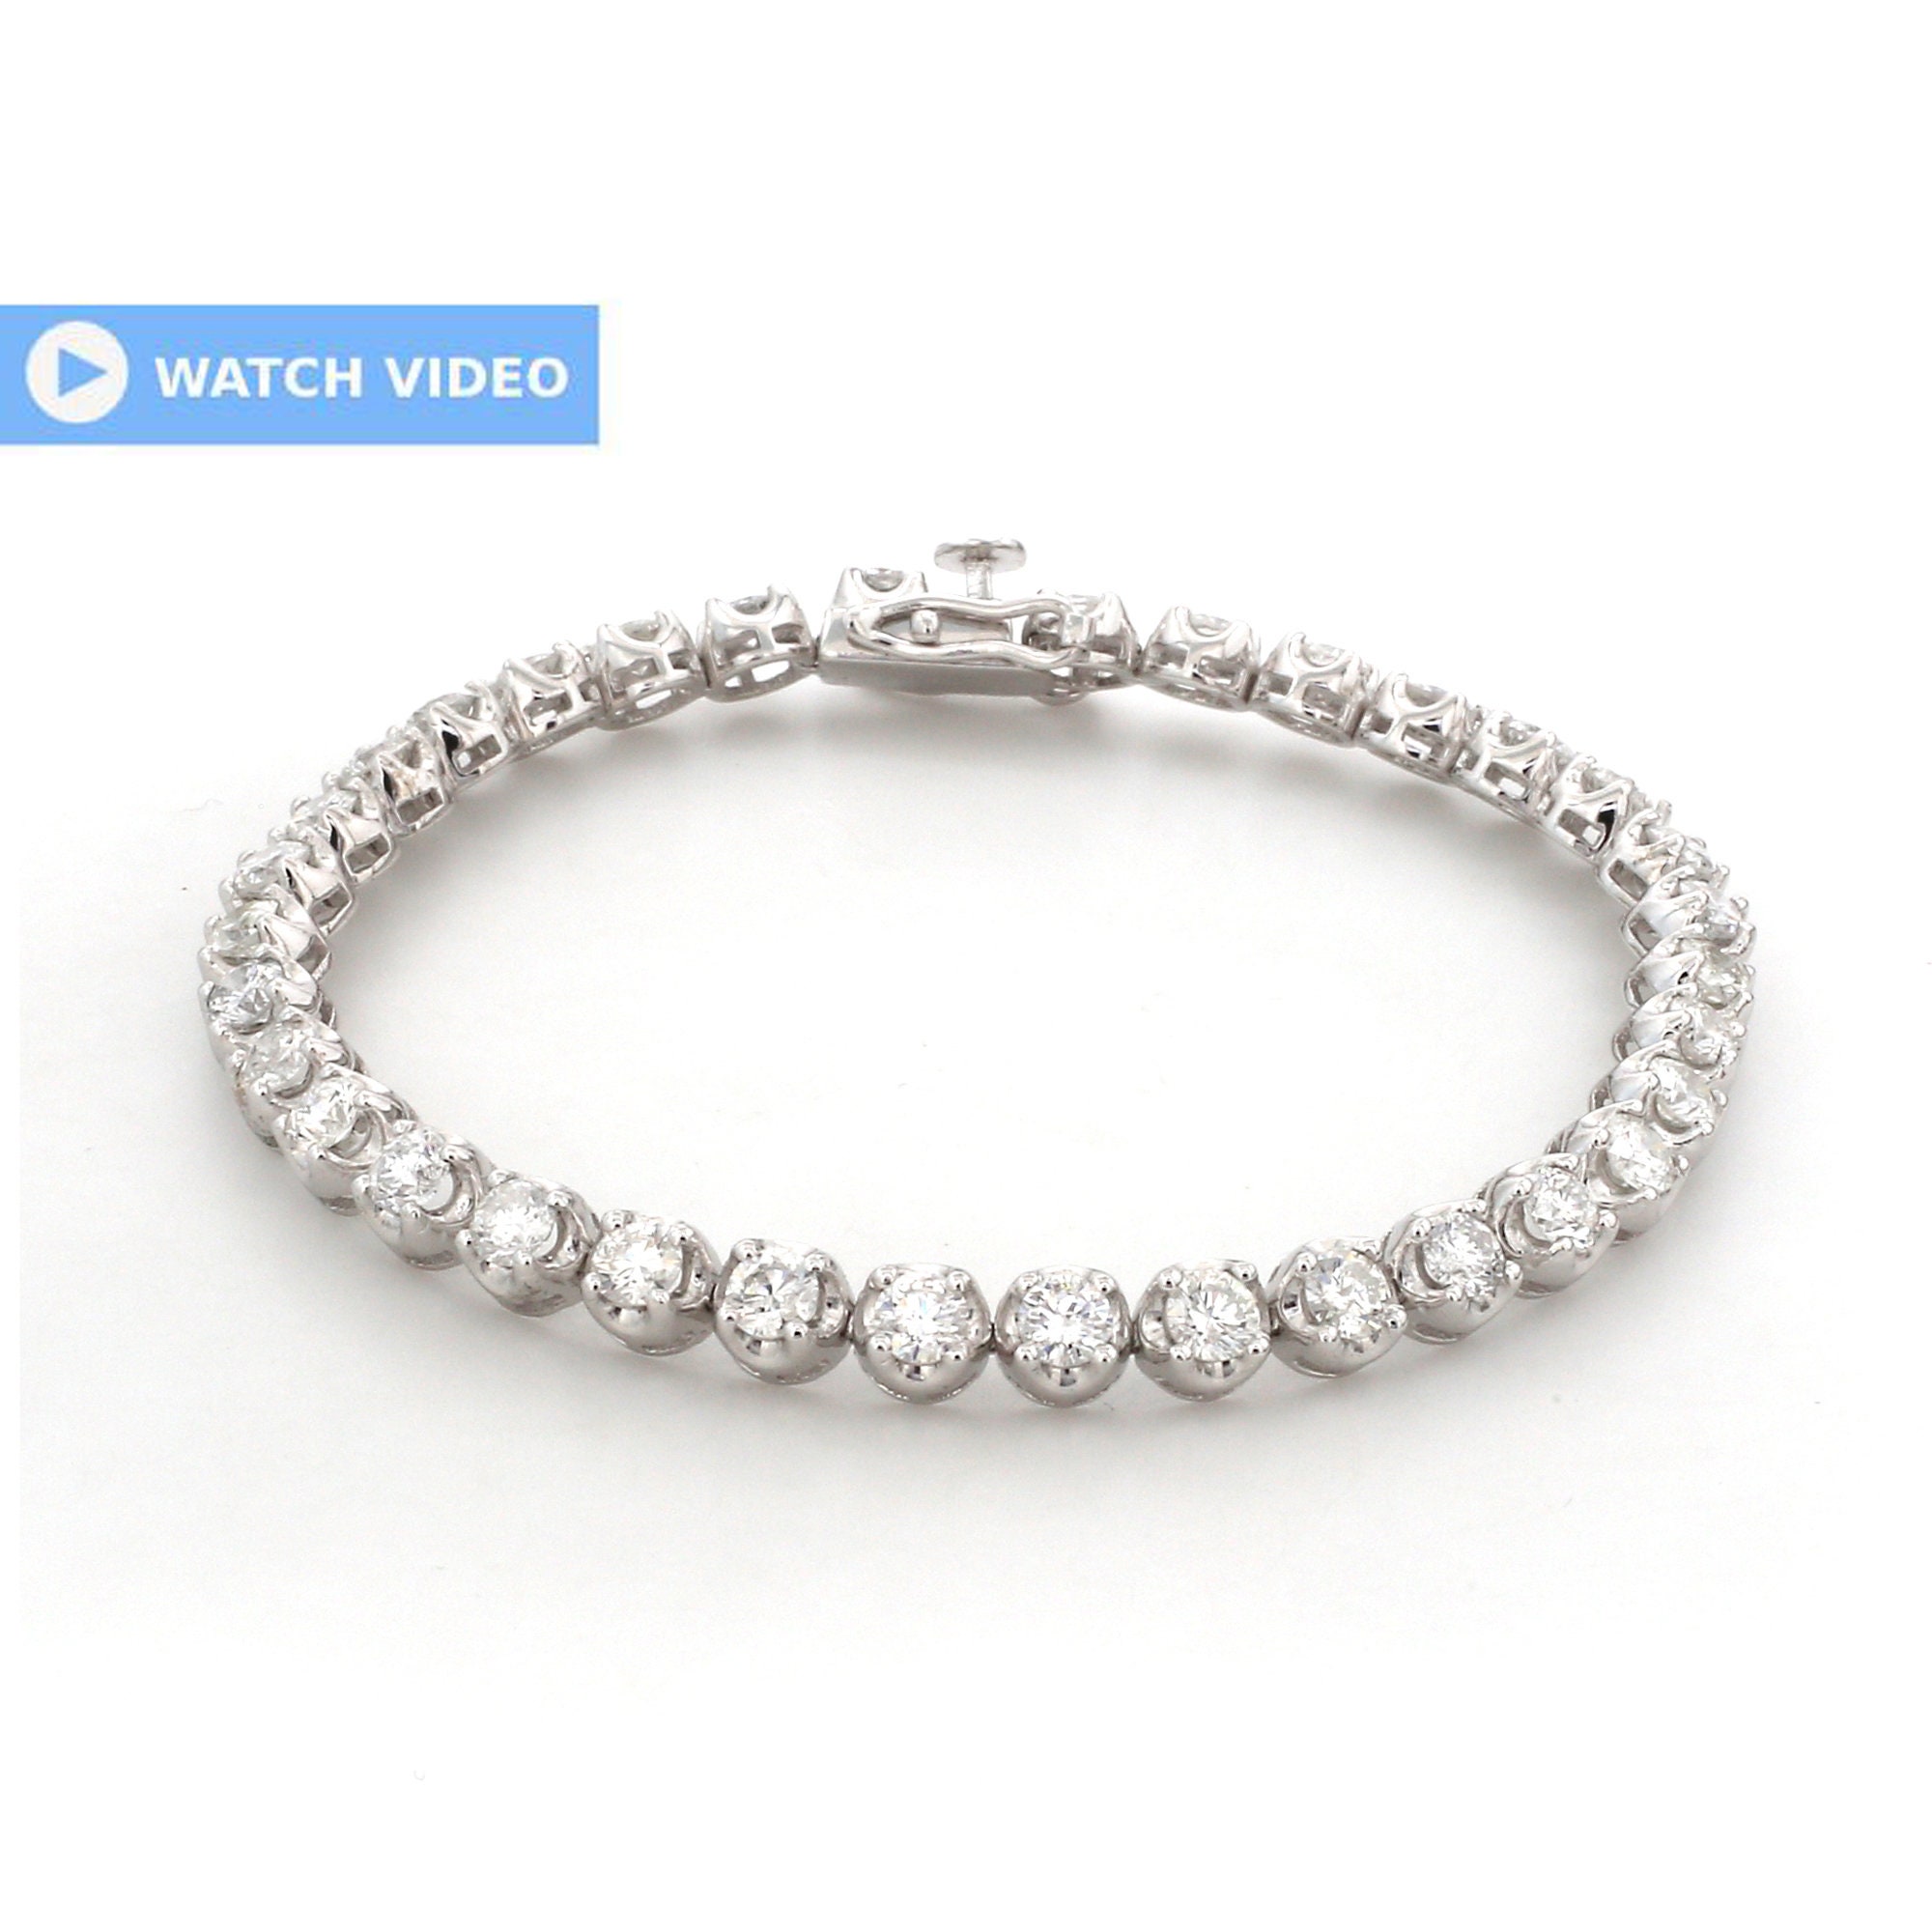 Certified Natural 5.80 Ct. Hi/Si Clarity Round Diamond Tennis Bracelet Solid 14K White Gold Handmade Fine Wedding Jewelry